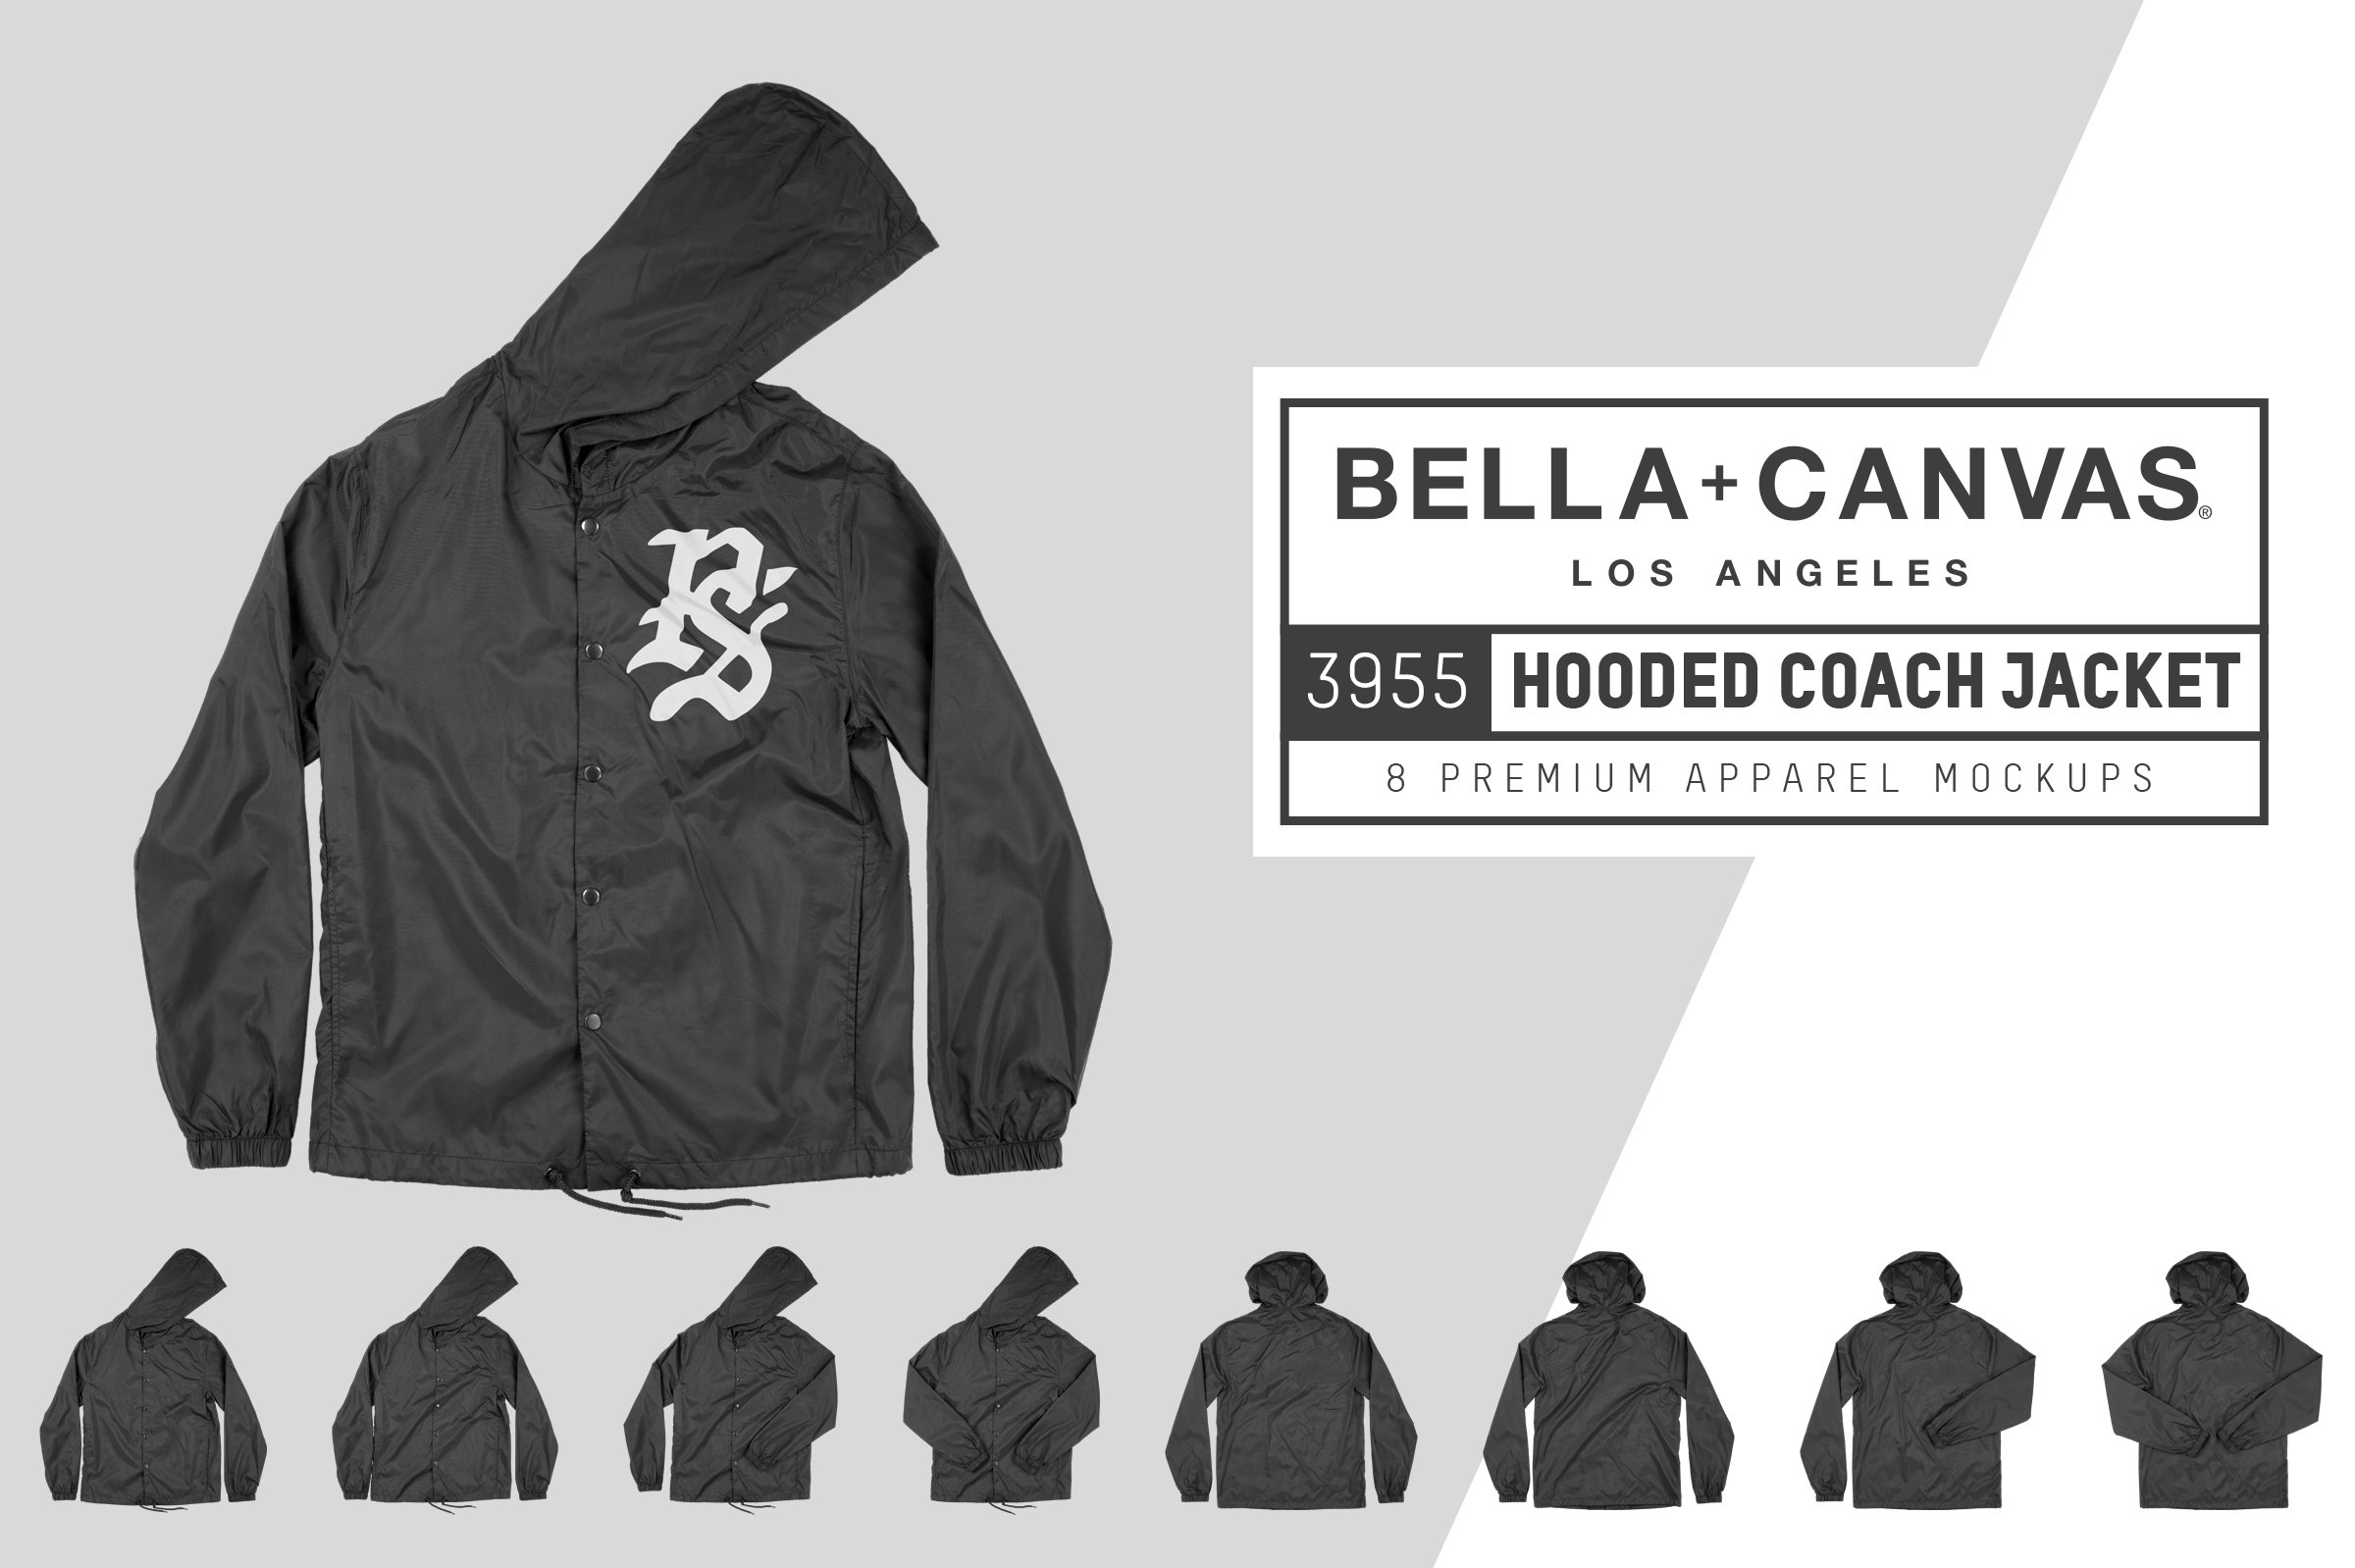 Bella Canvas 3955 Coach Jacket cover image.